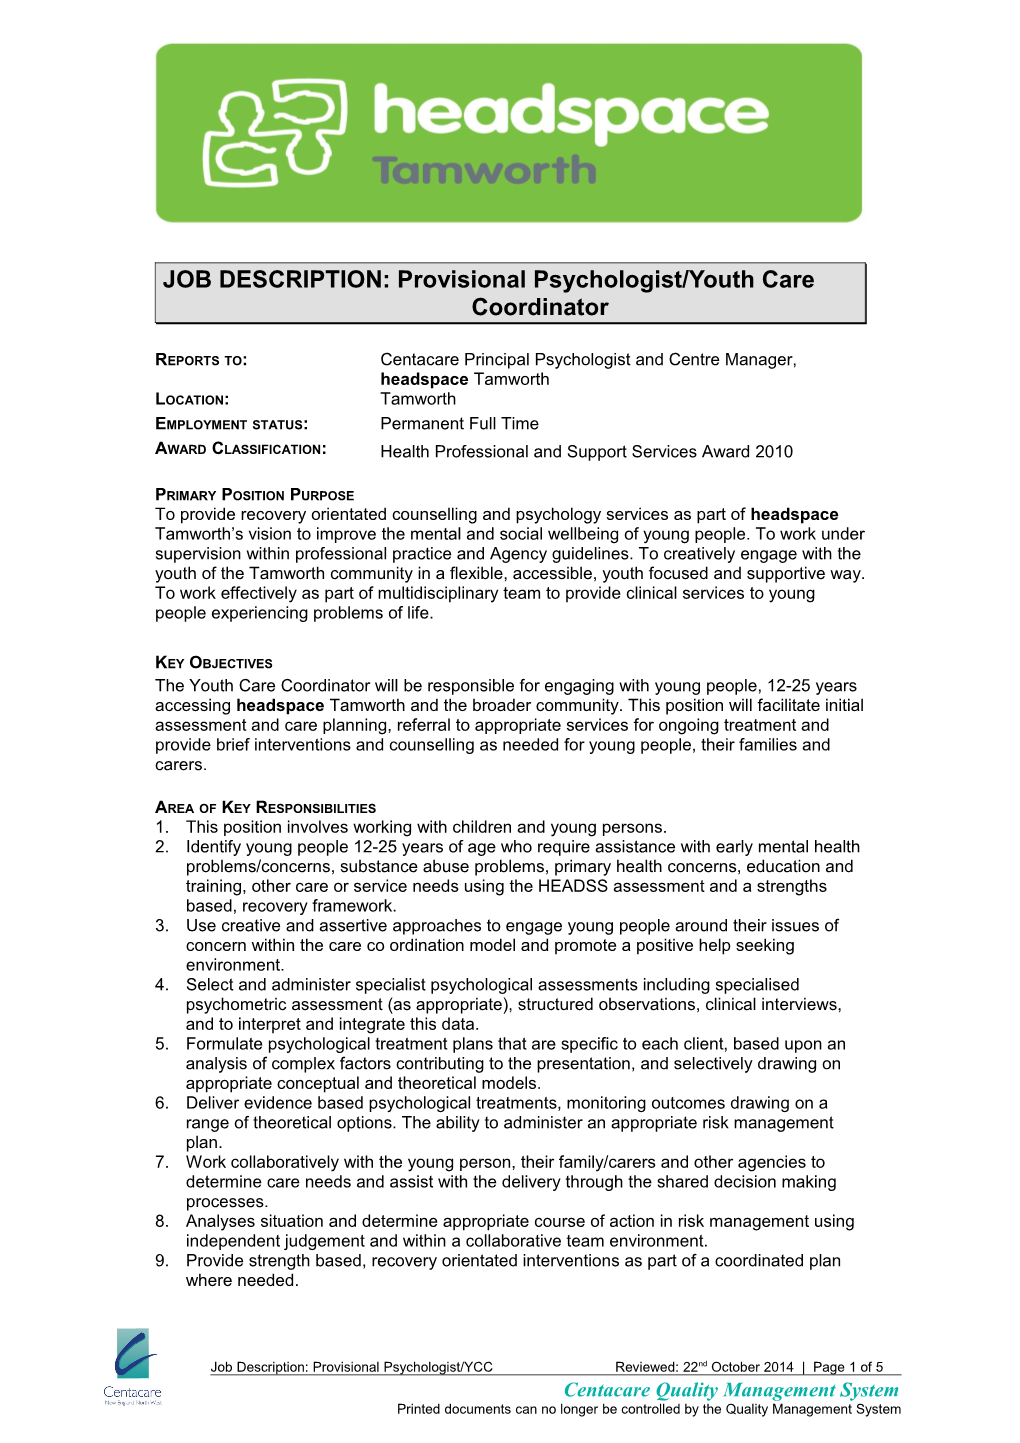 JOB DESCRIPTION: Provisional Psychologist/Youth Care Coordinator